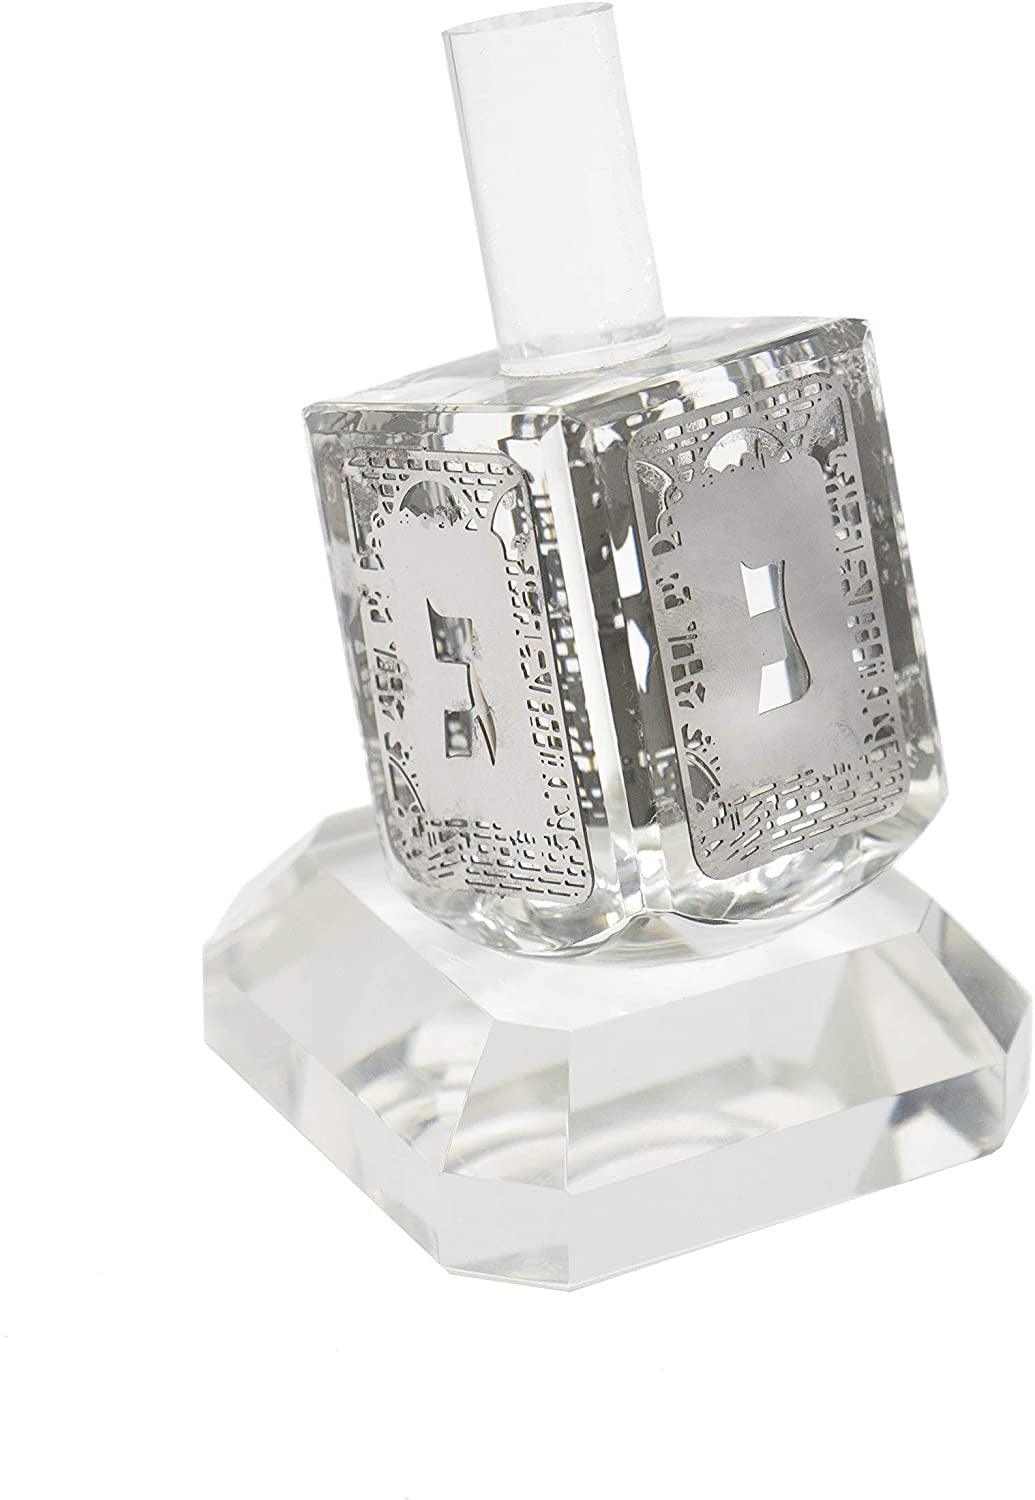 Jerusalem Holyland Crystal Glass Dreidel Made in with Pedestal and Silver Ornaments - Spring Nahal